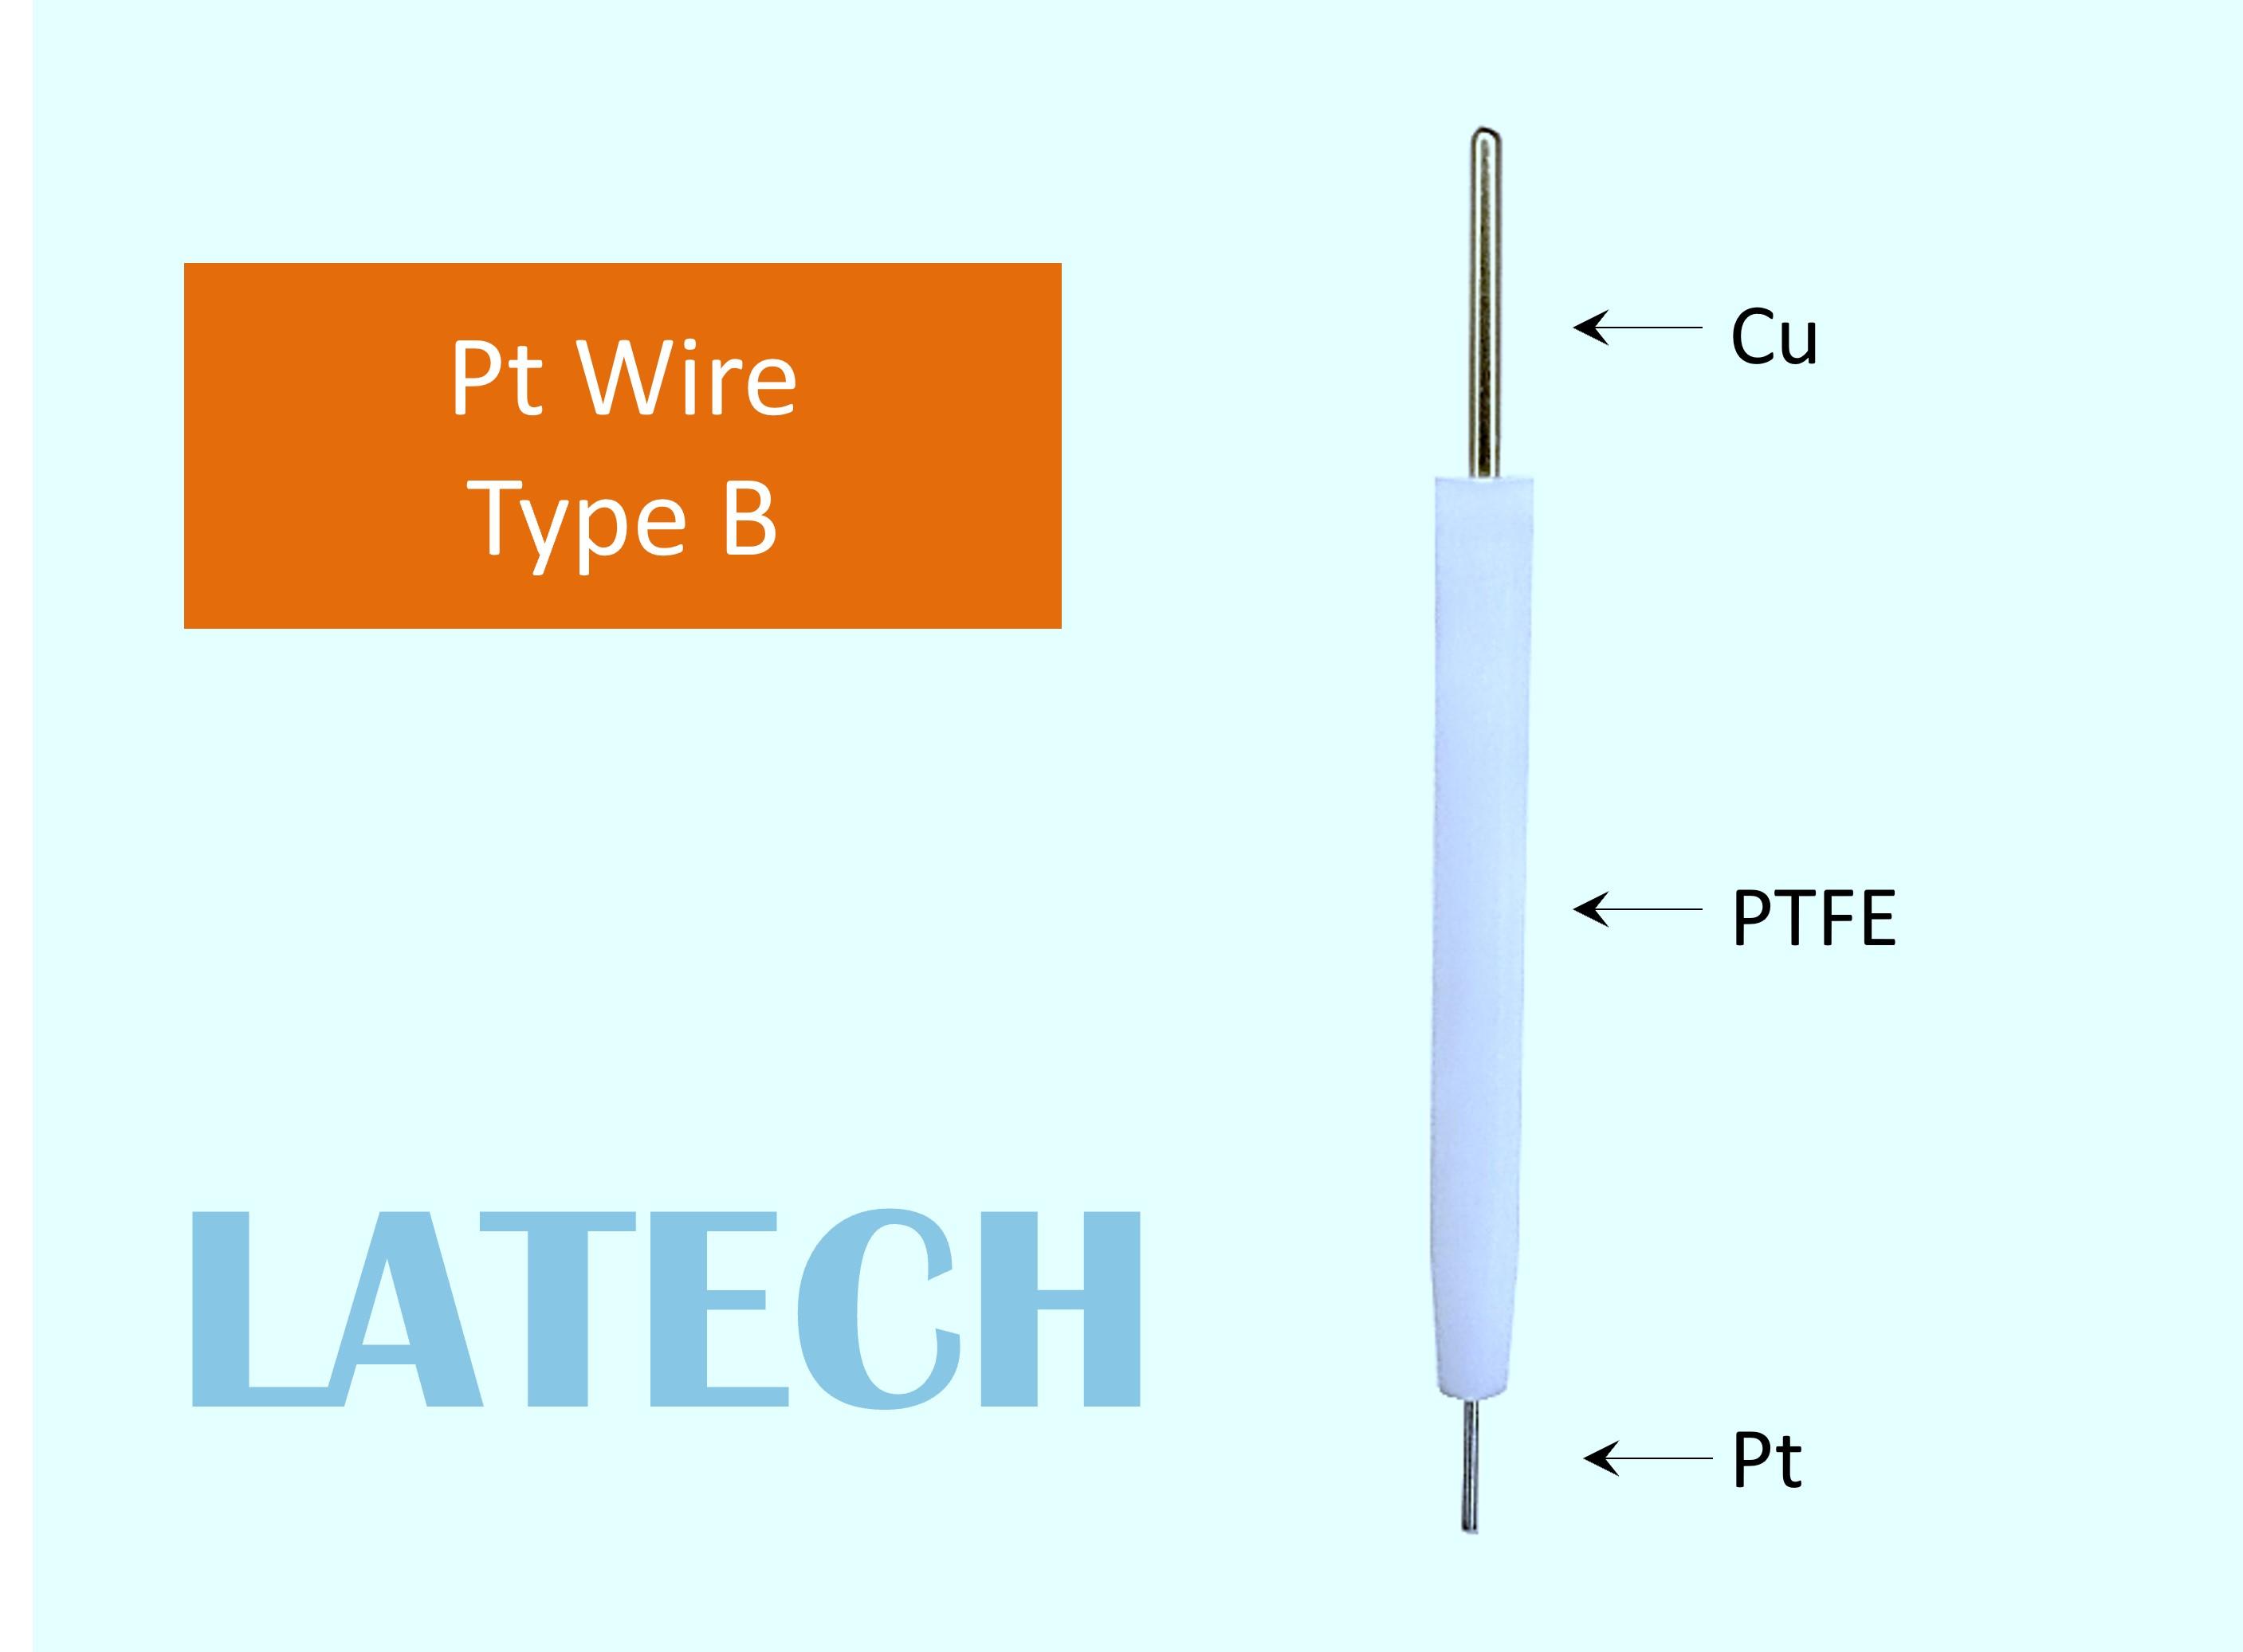 Pt wire Type B Latech.jpg